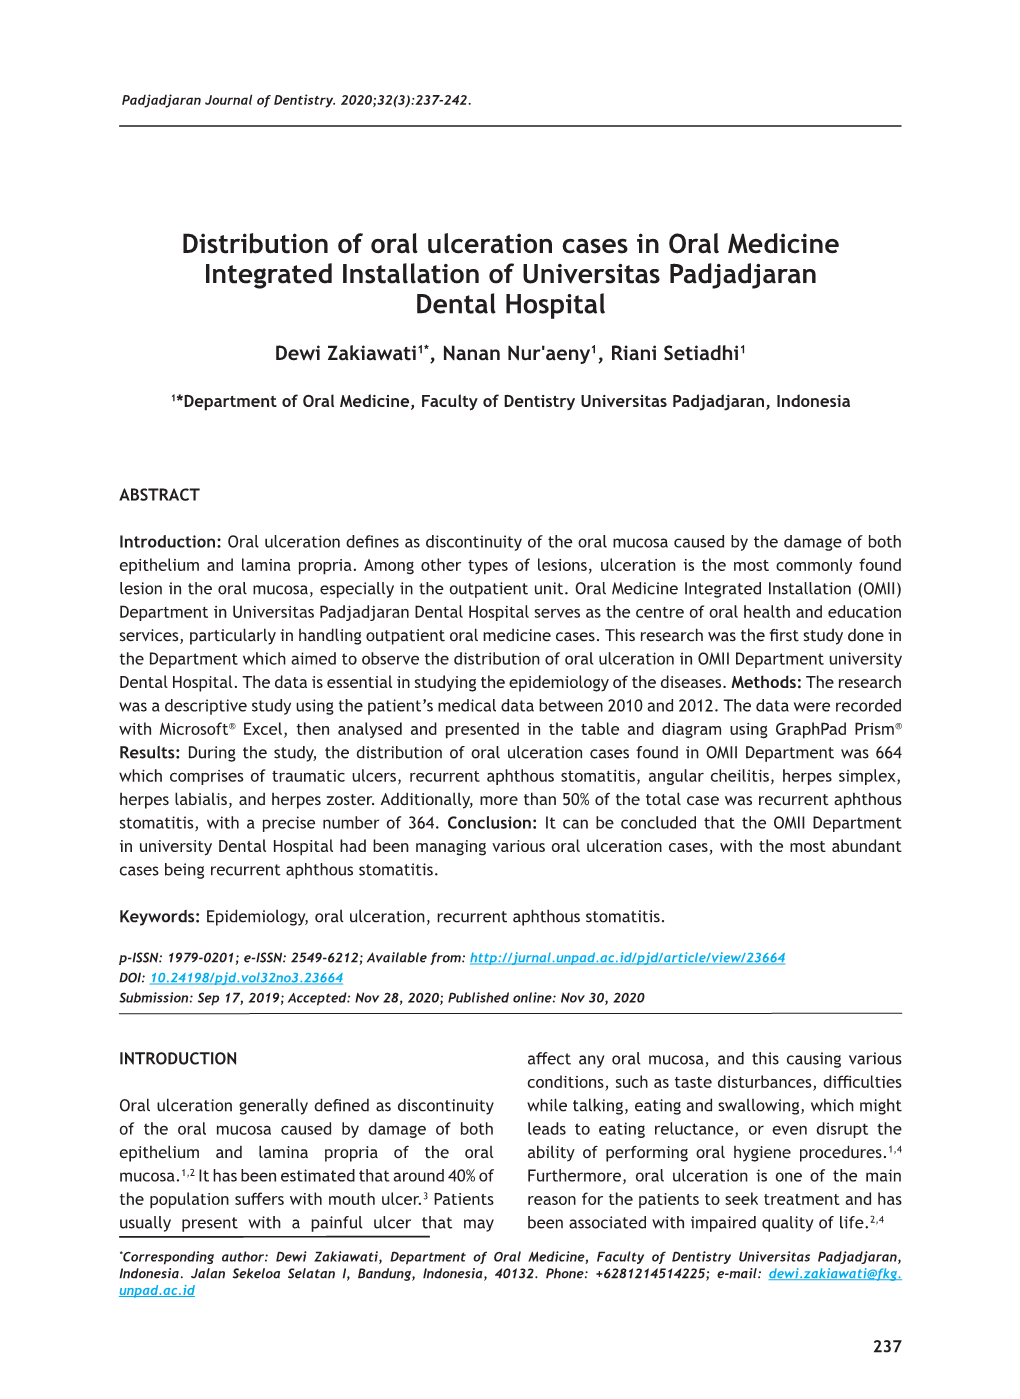 Distribution of Oral Ulceration Cases in Oral Medicine Integrated Installation of Universitas Padjadjaran Dental Hospital